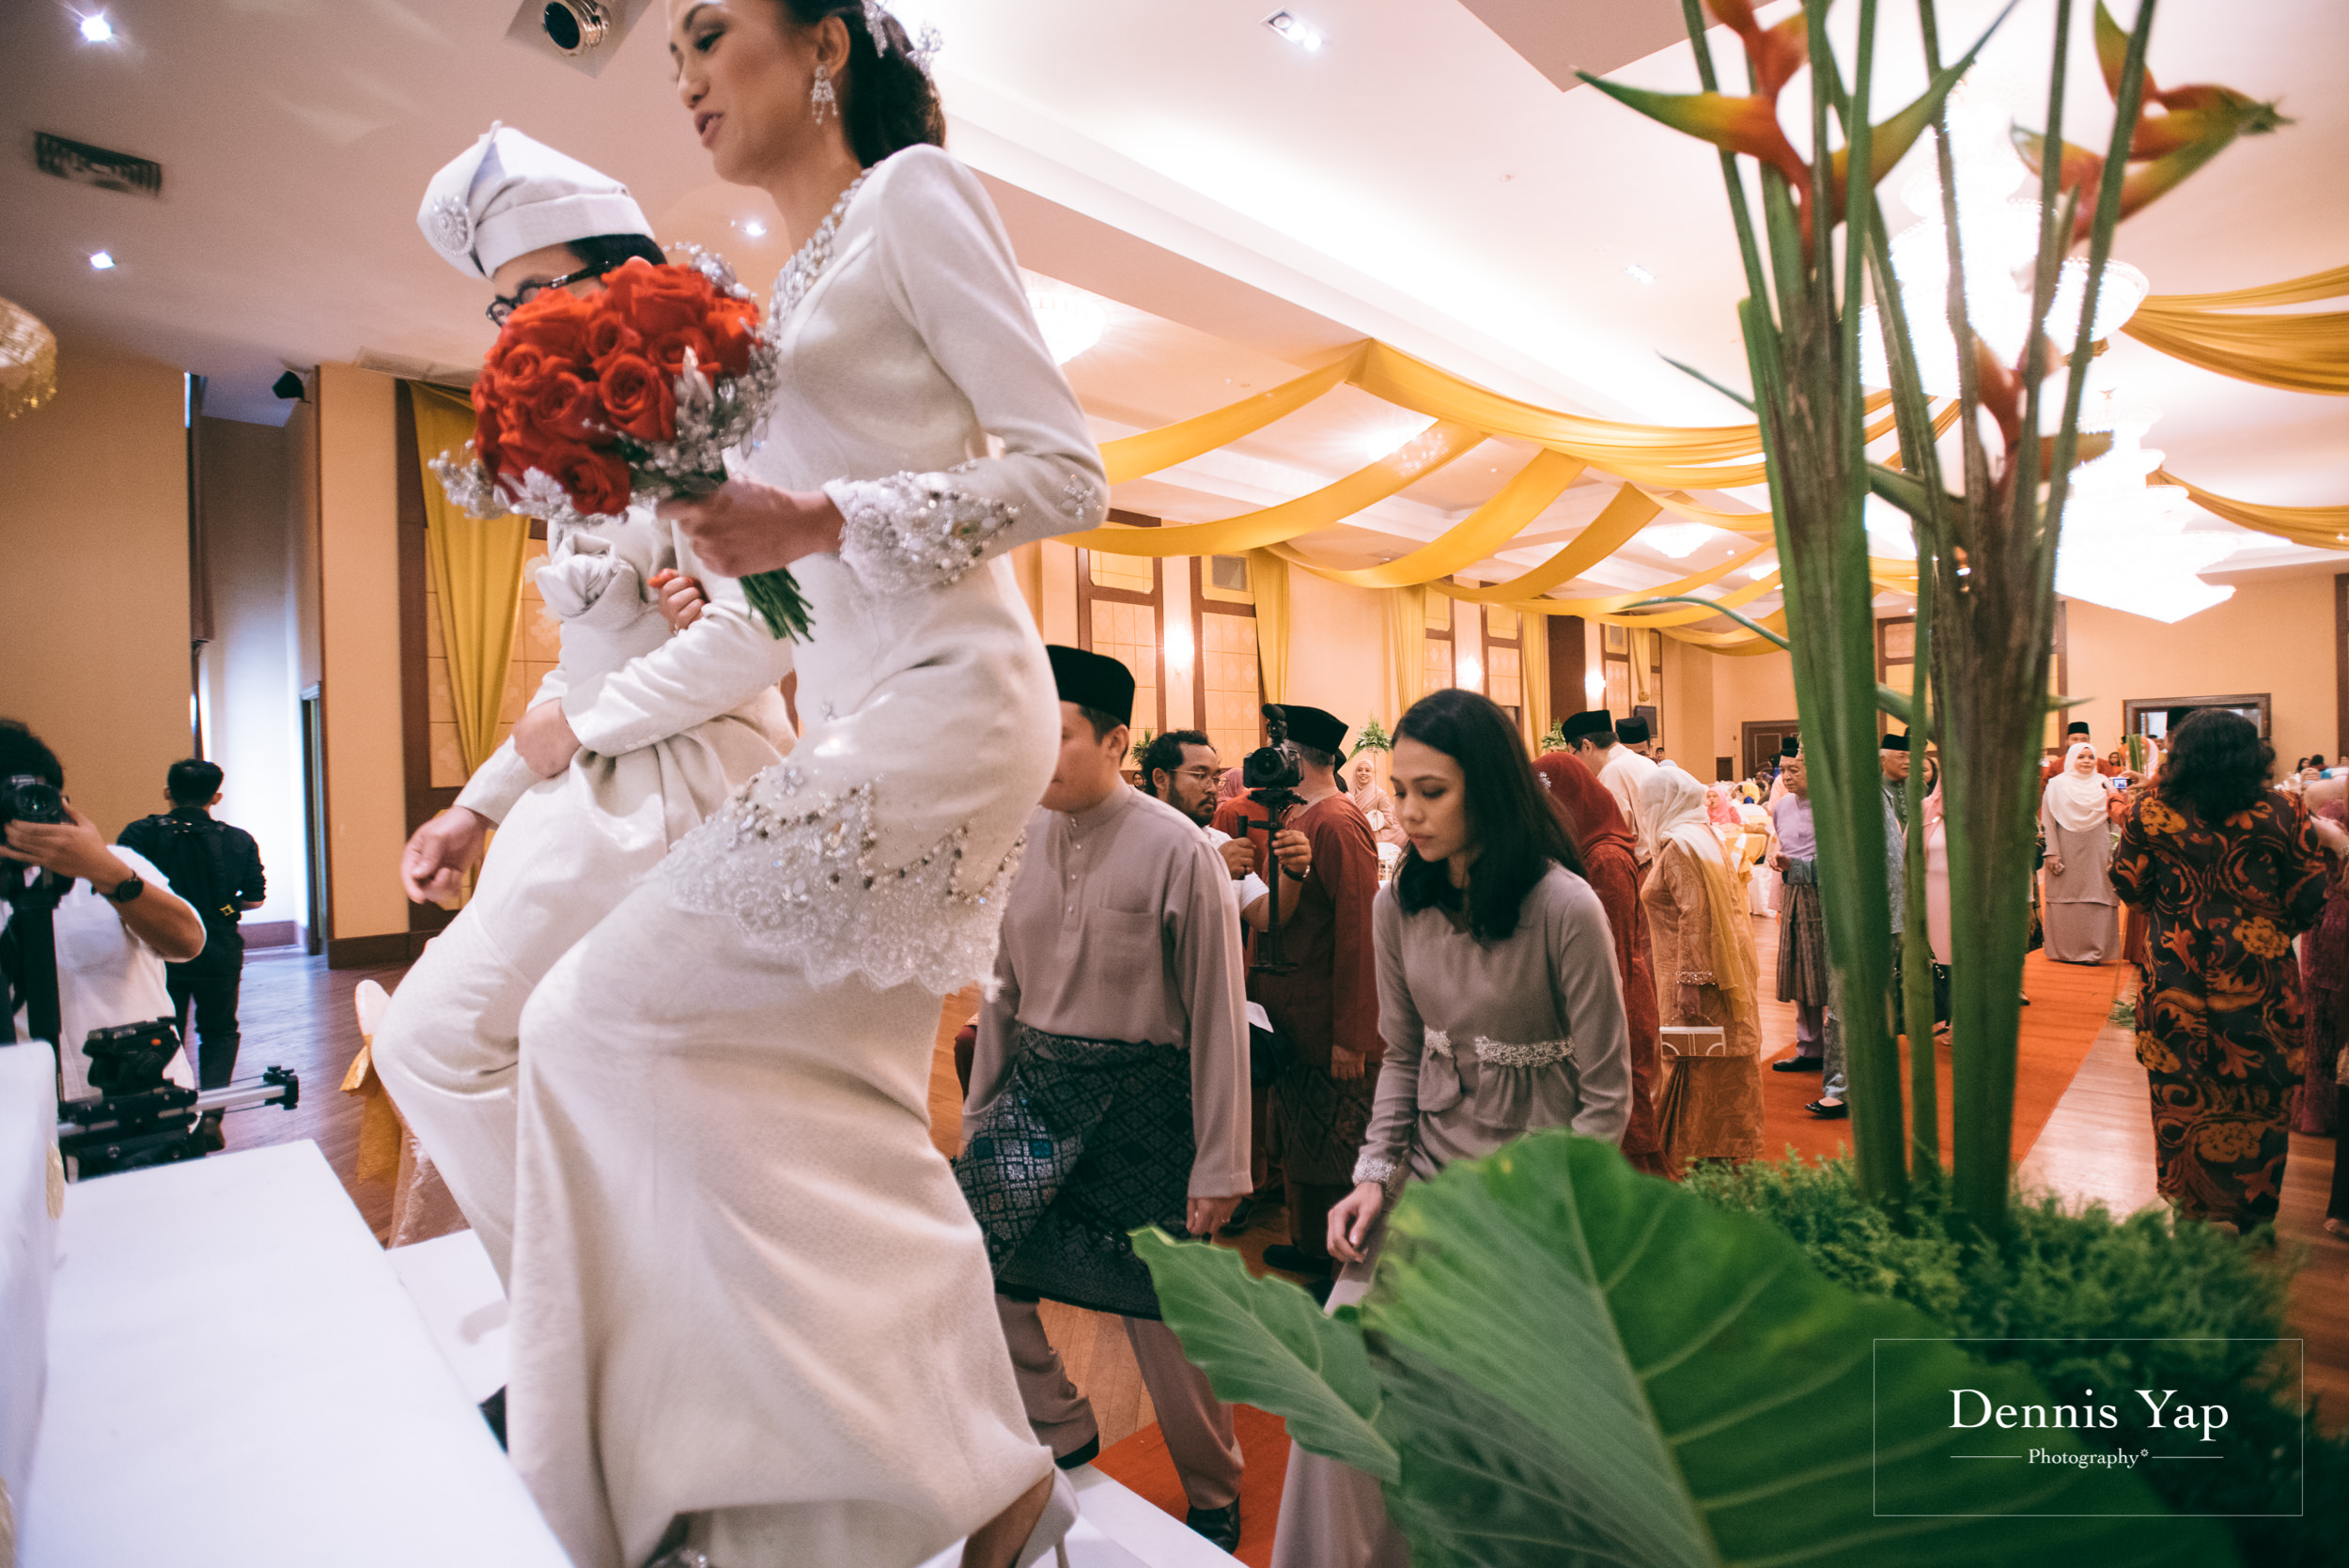 zarif hanalili malay wedding blessing ceremony dennis yap photography-12.jpg